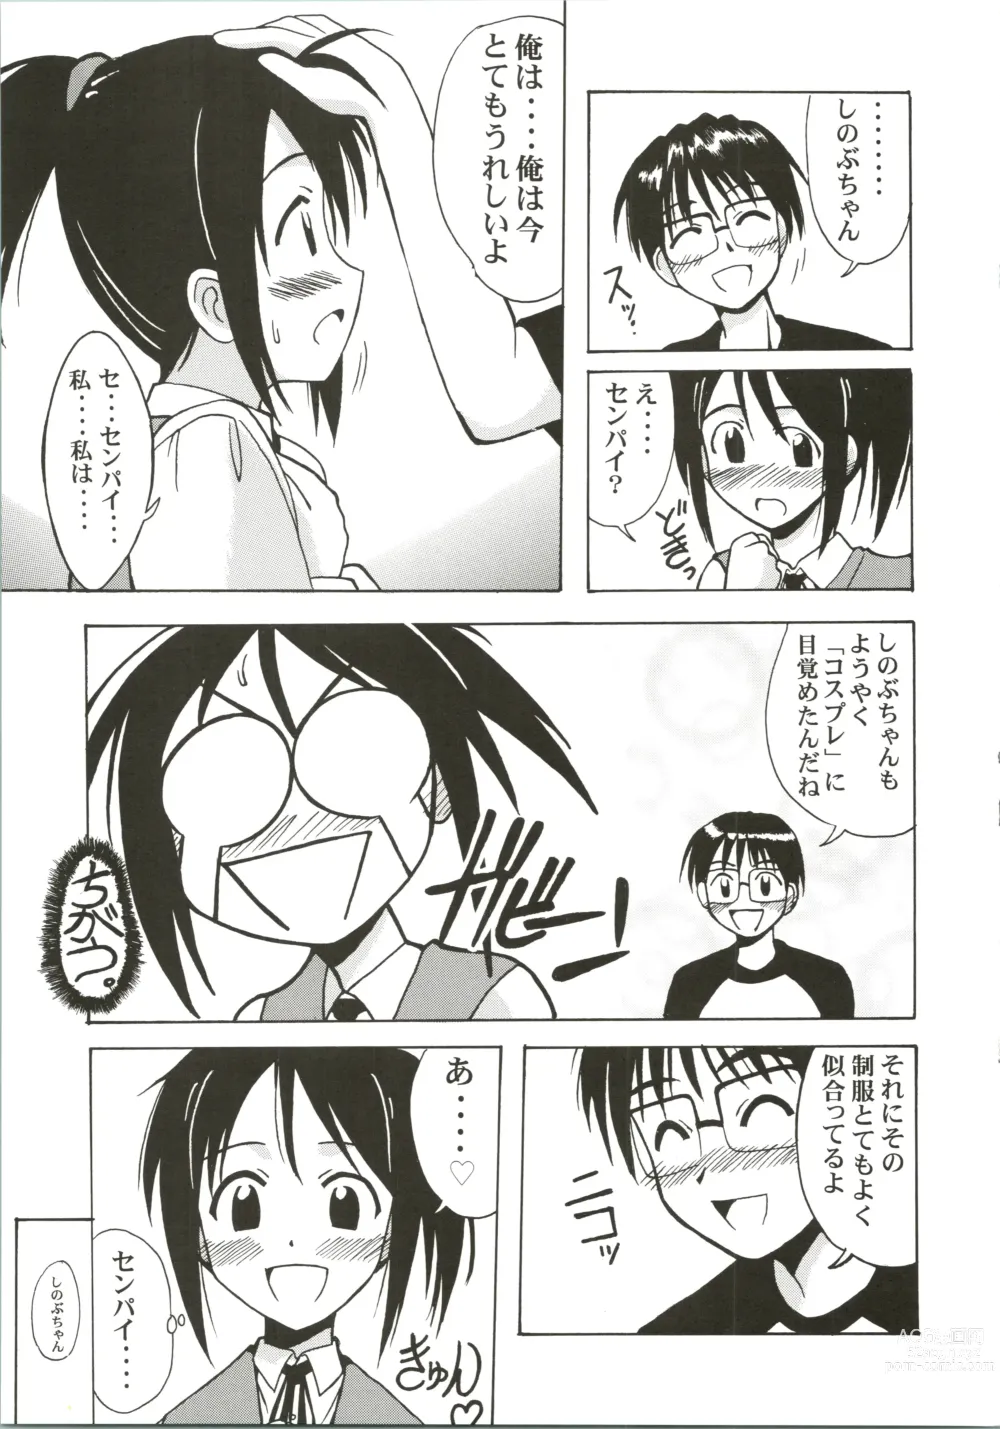 Page 11 of doujinshi Shinobu SP.